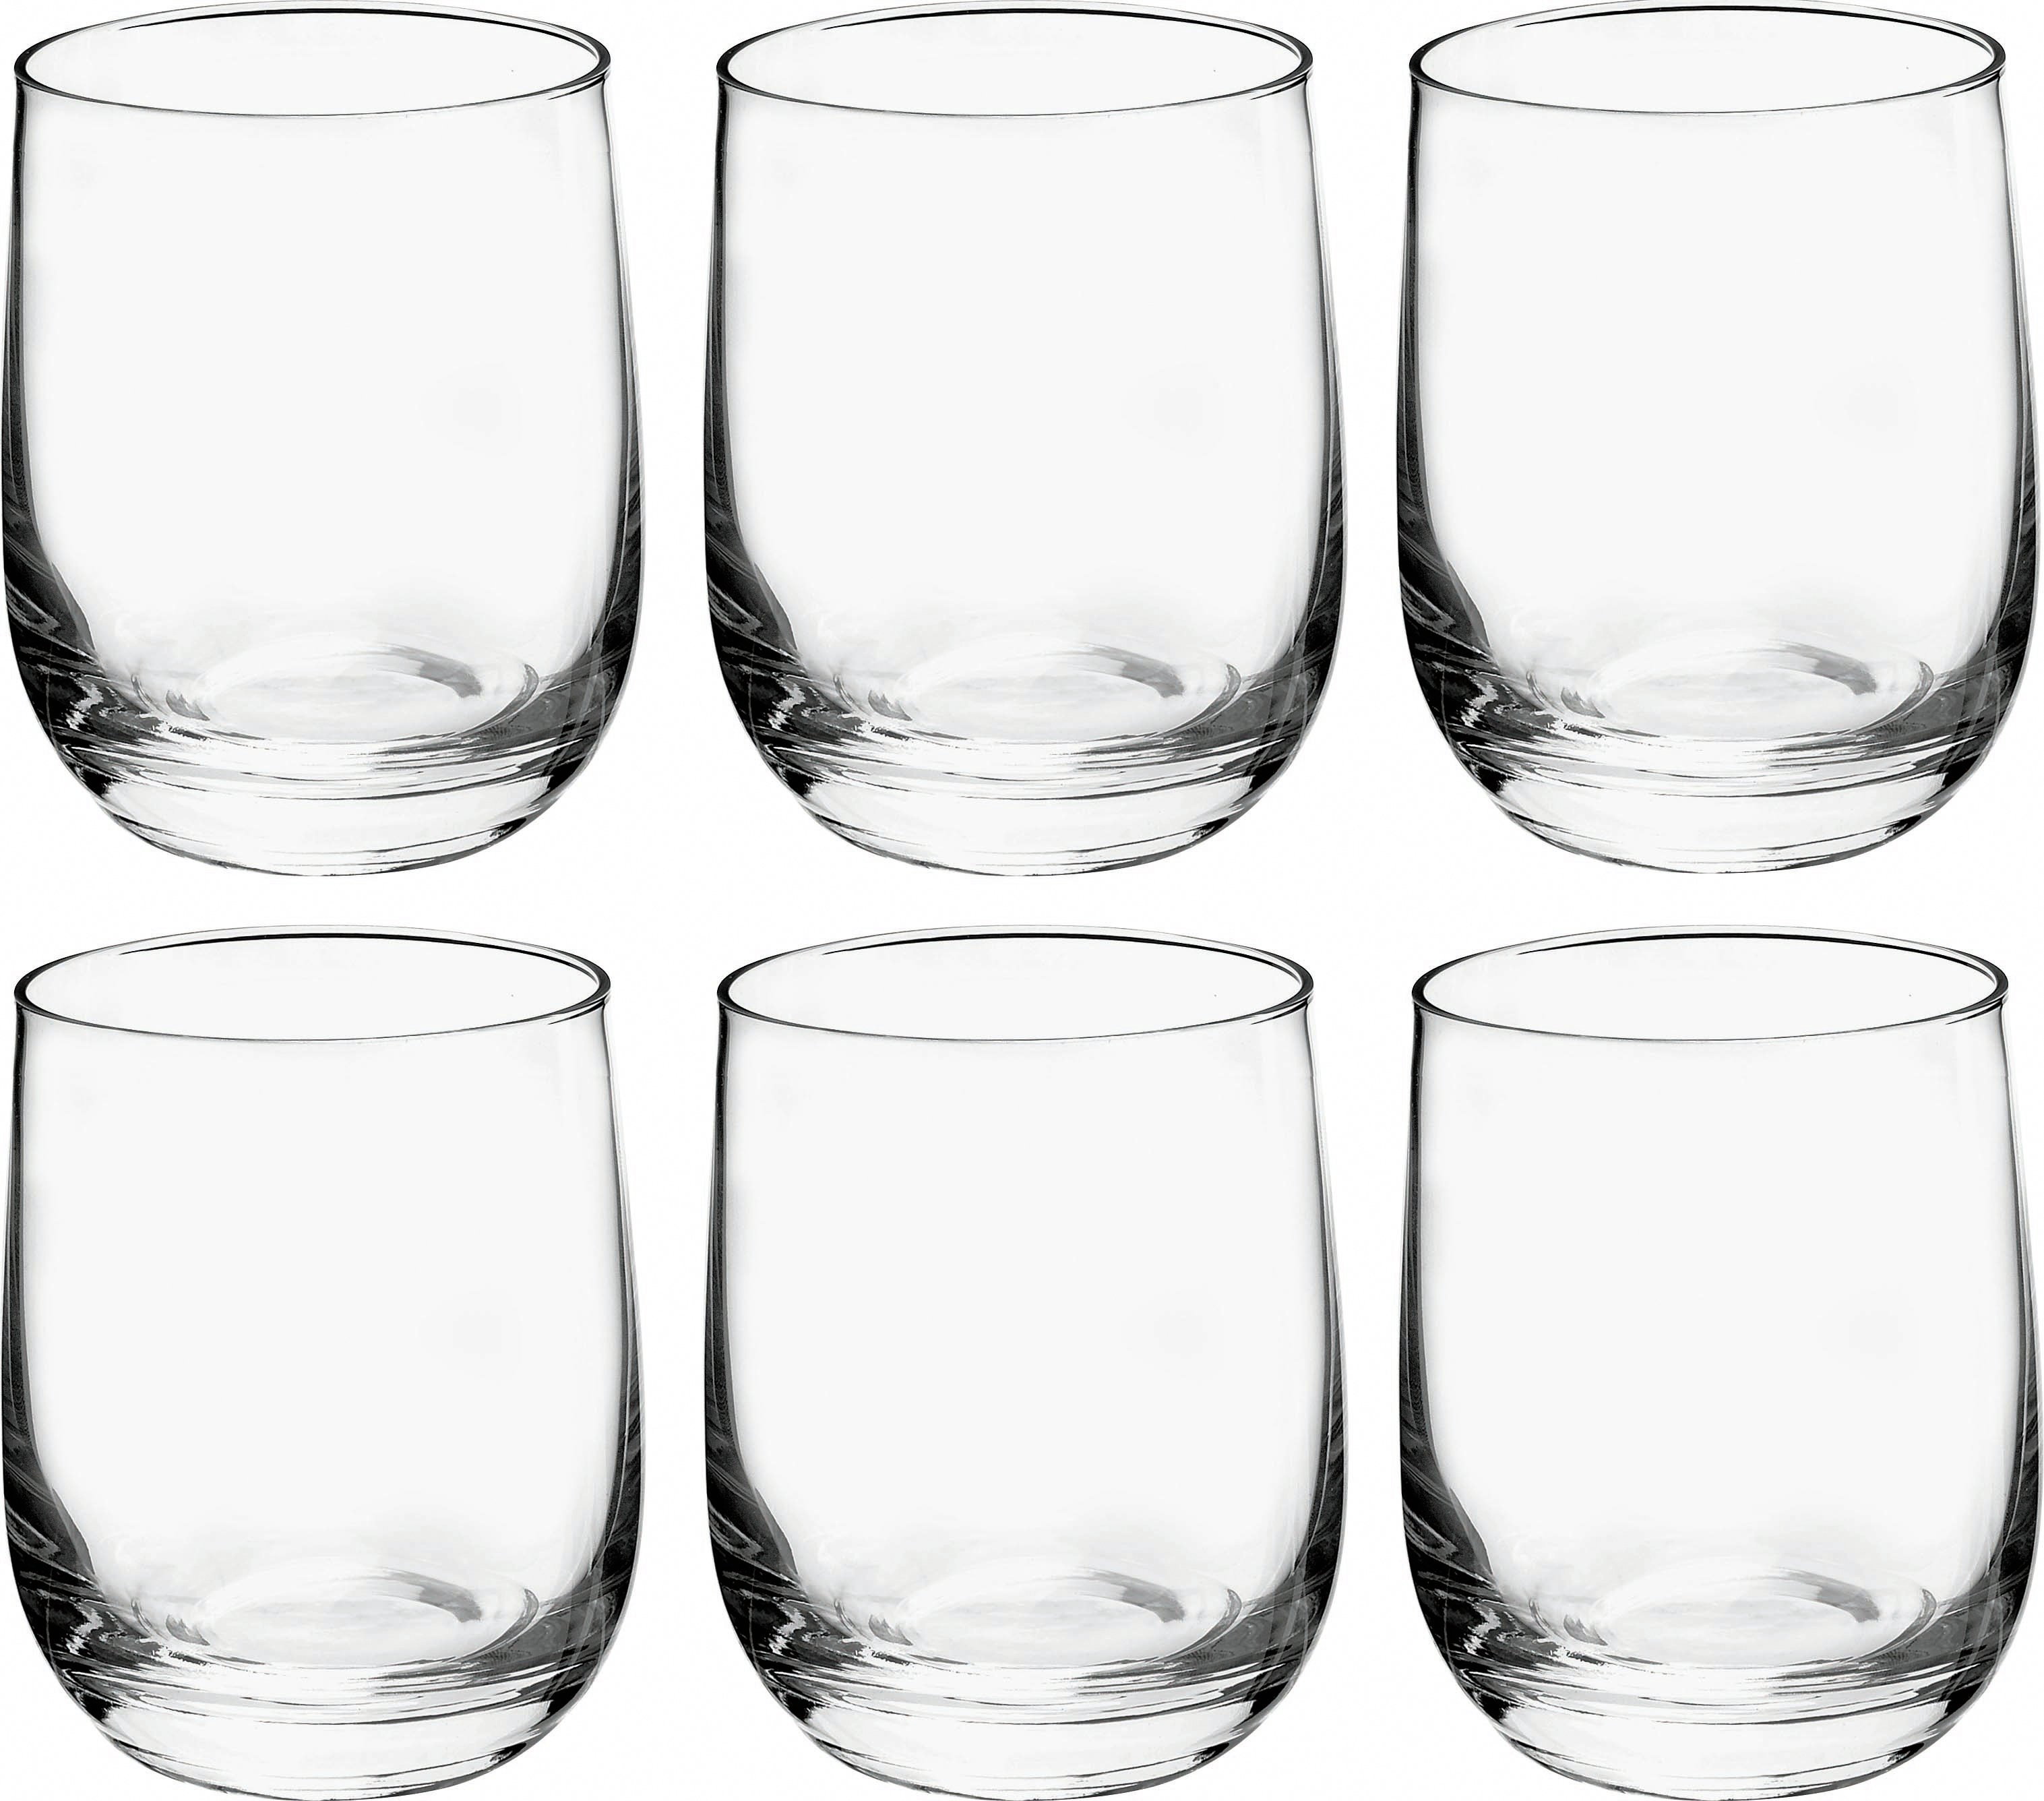 Habitat Joy Glassware Set of 6 Tumbler Glasses